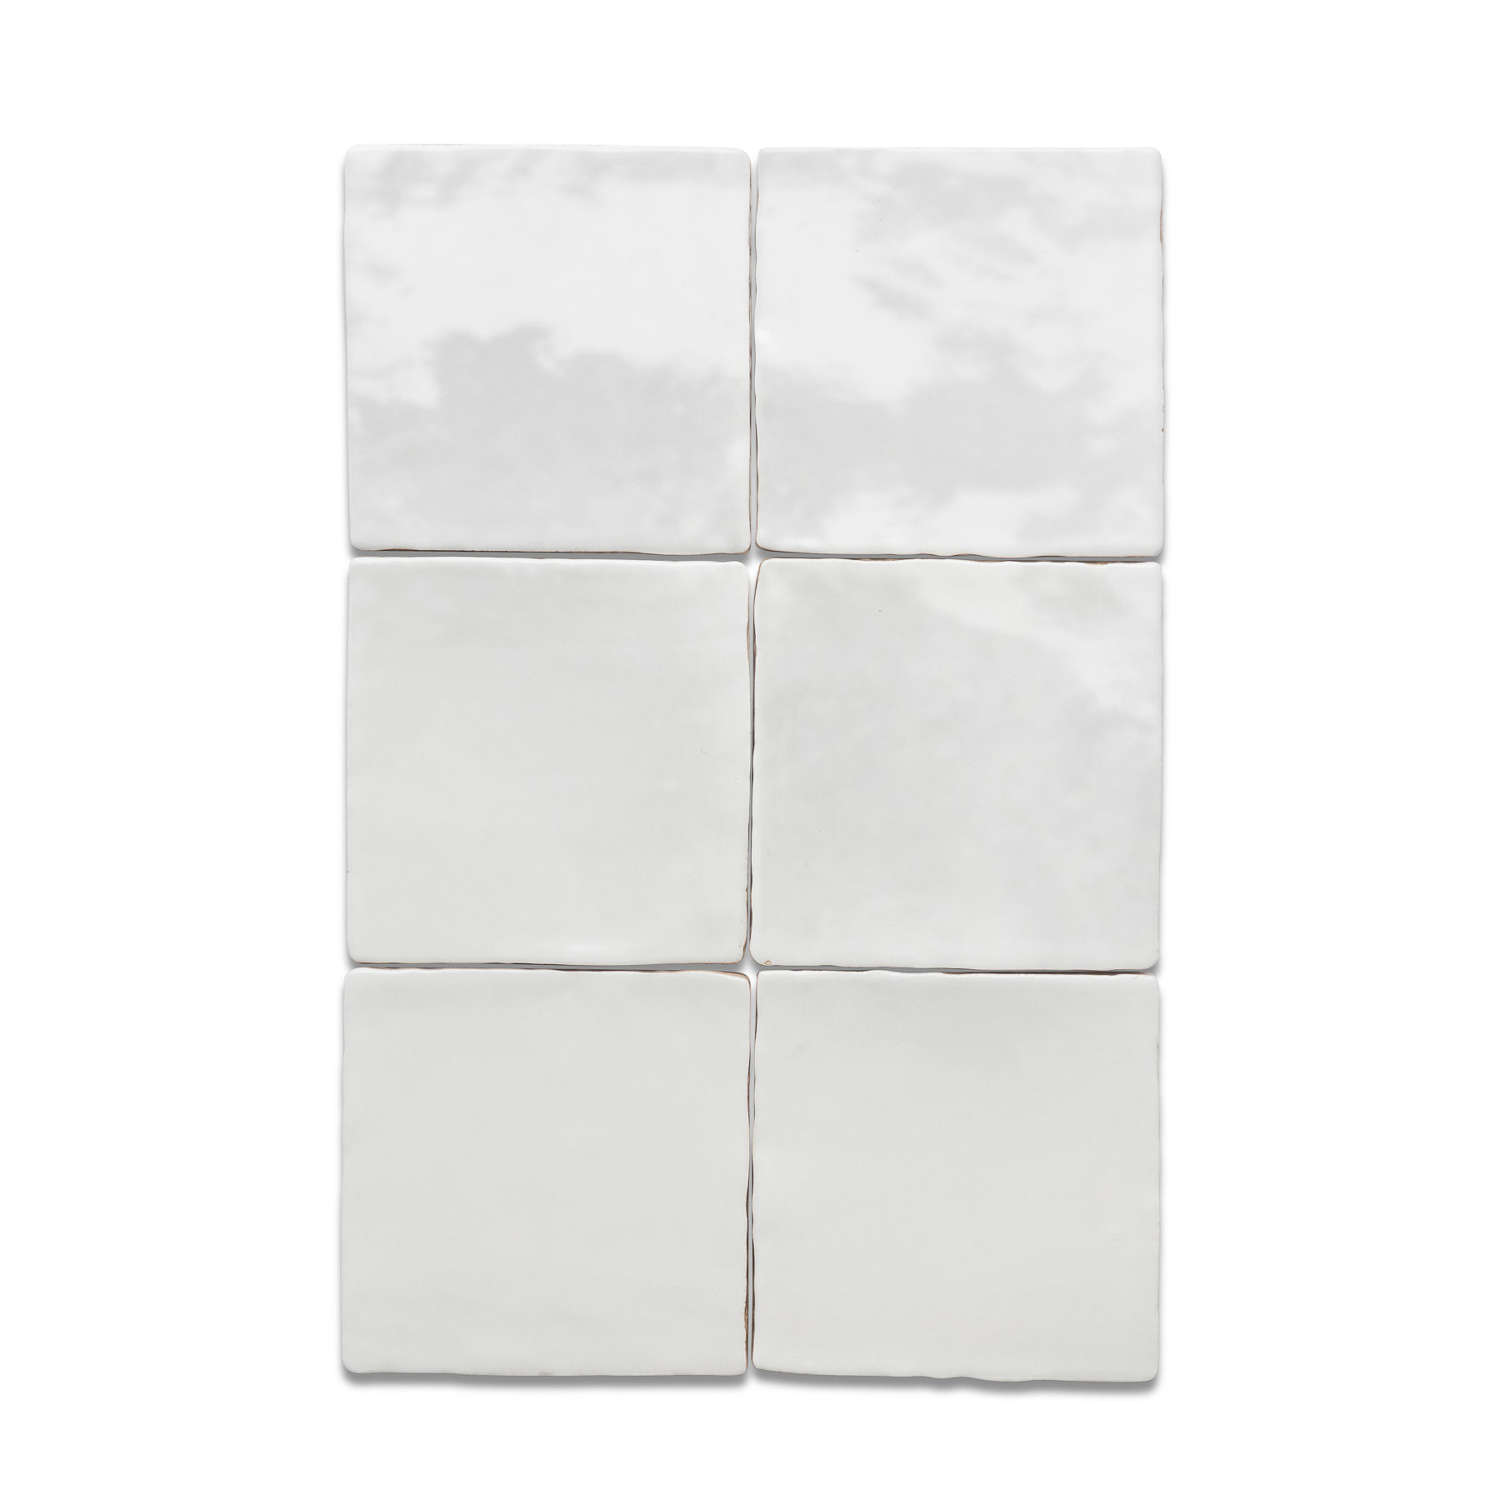 Spanish gloss white wall tiles